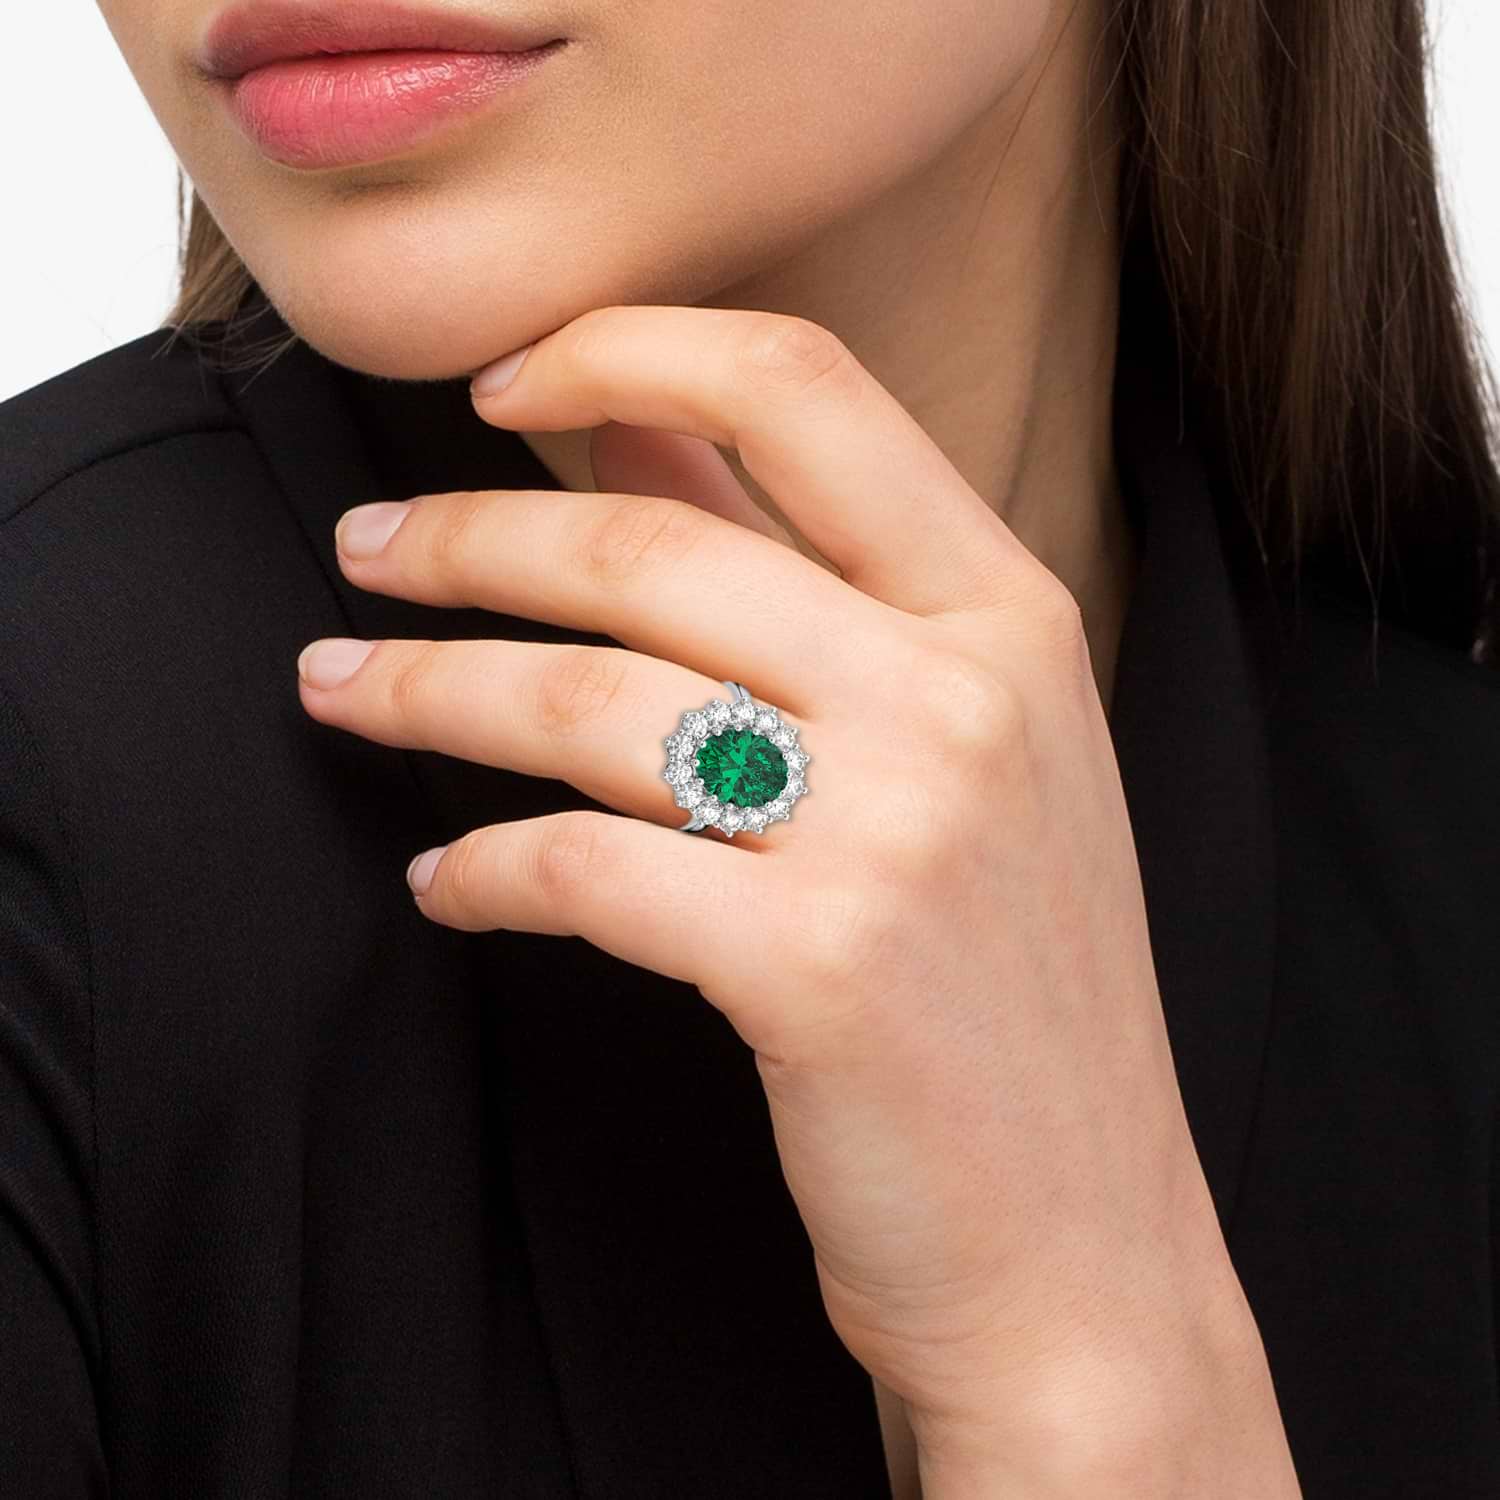 Oval Lab Emerald & Diamond Halo Lady Di Ring 14k White Gold (6.40ct)